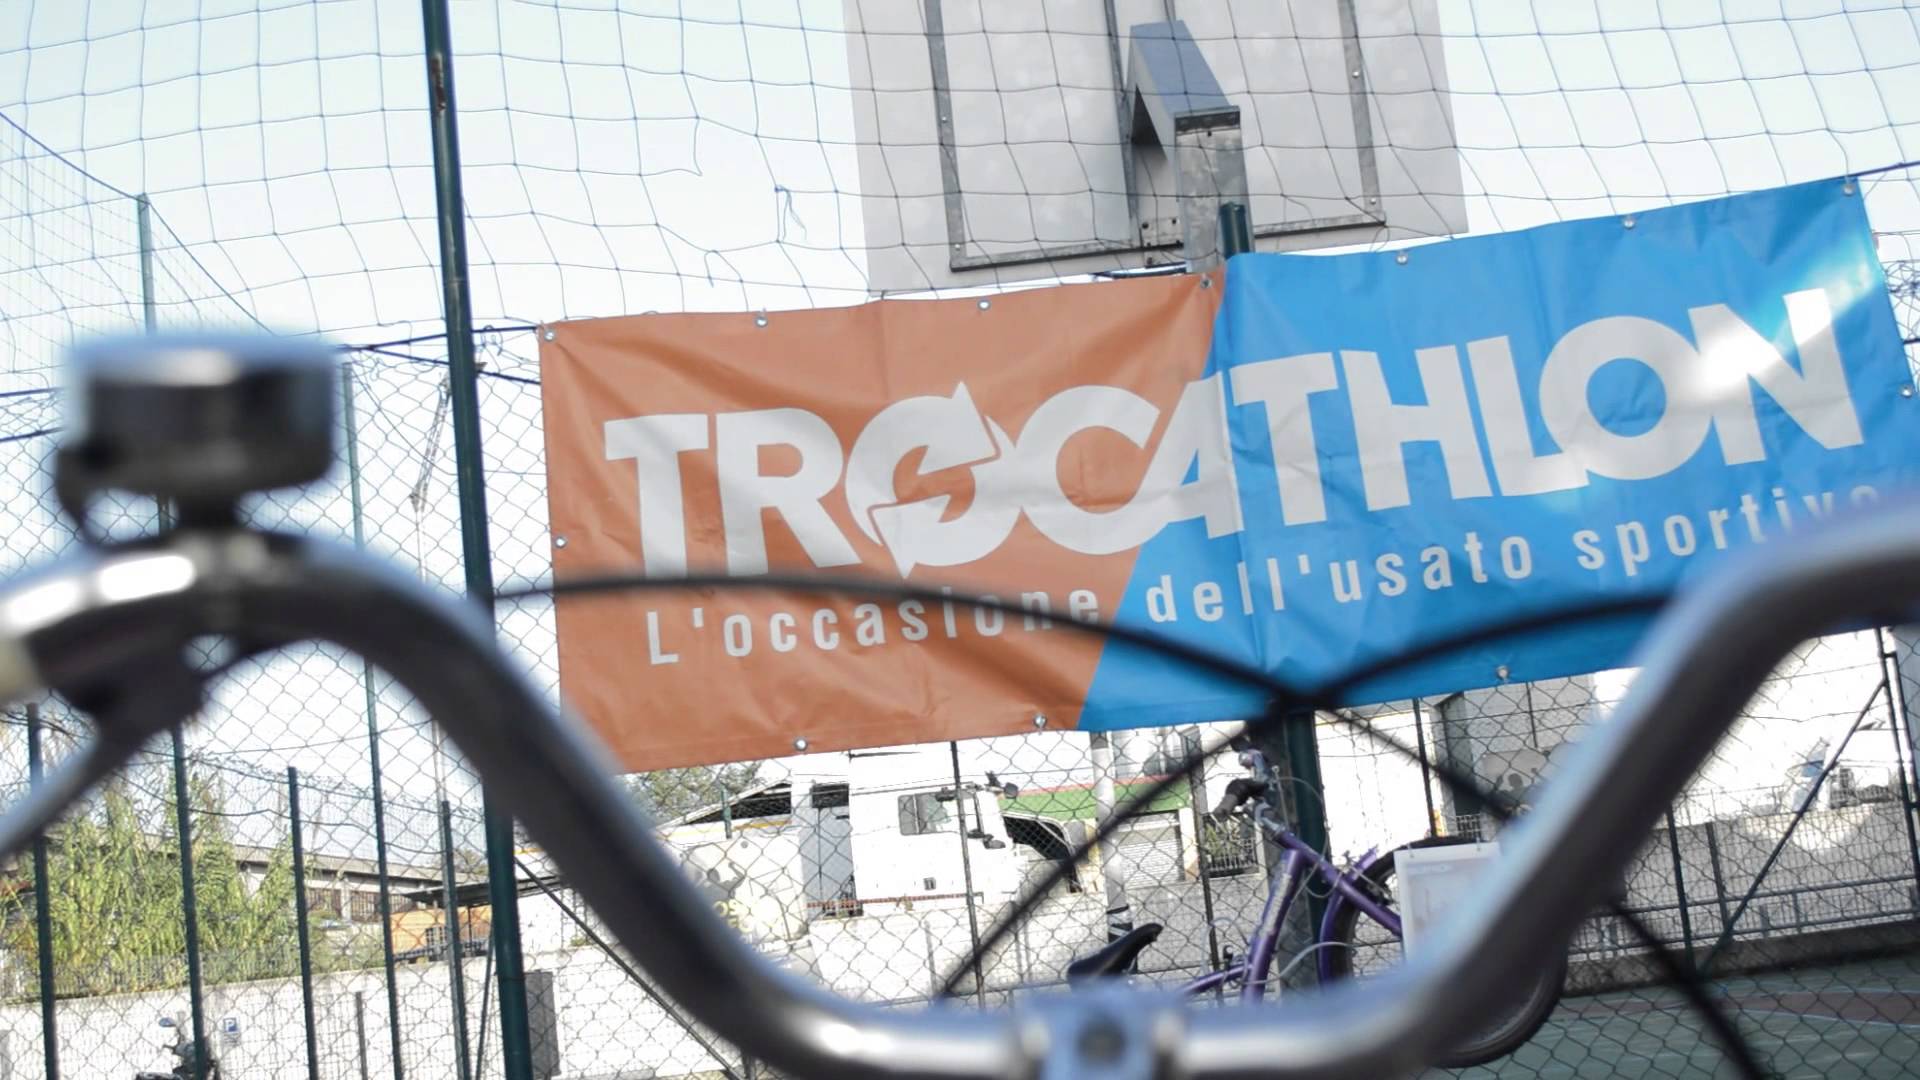 Decathlon - Trocathlon - targ de articole sportive second hand